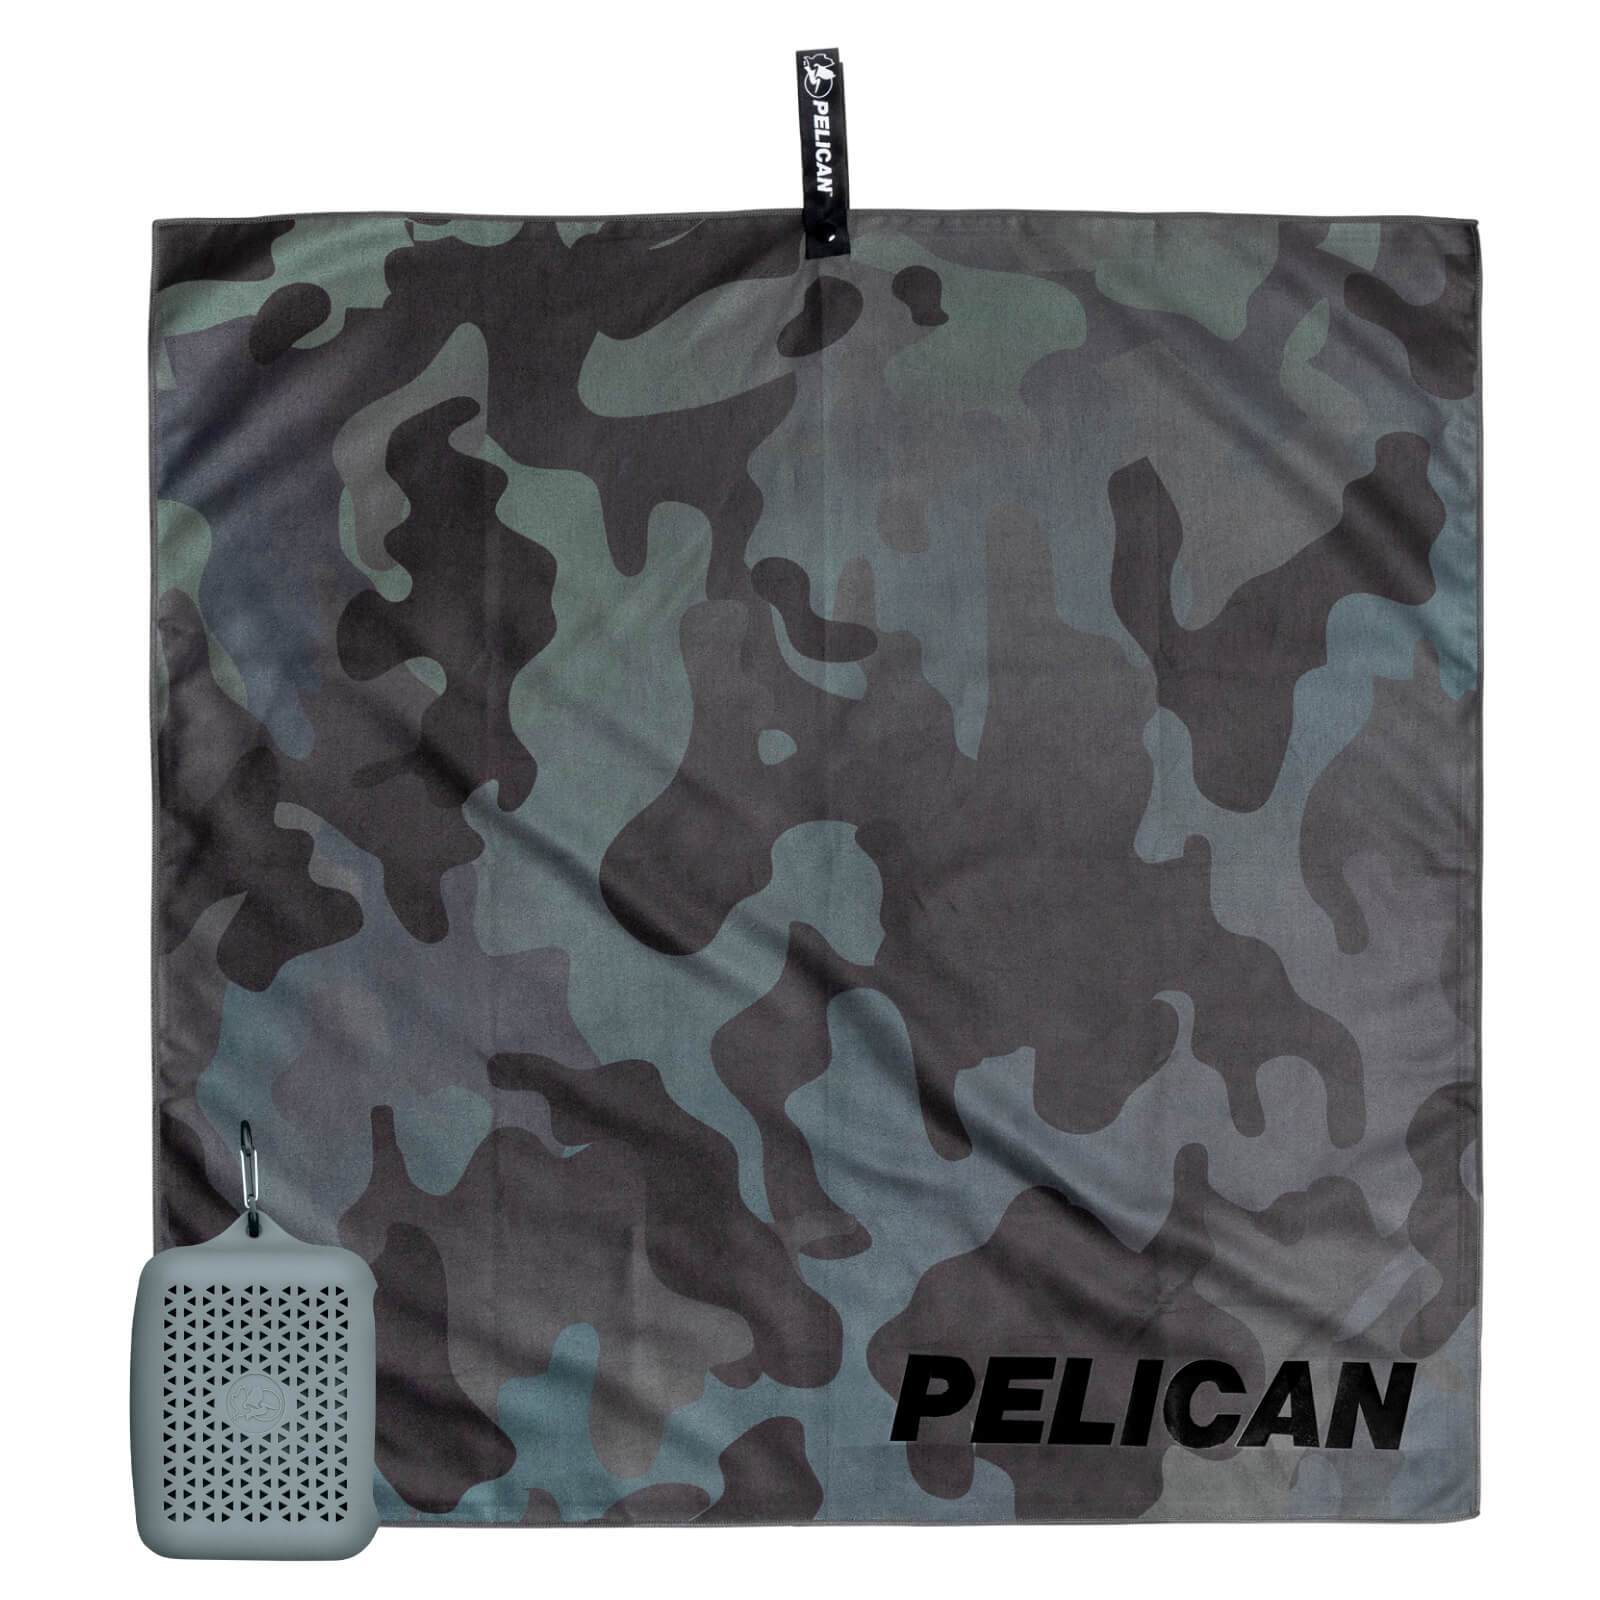 Pelican Outdoor Civilian Multi Use Towel with Carry Case Shadow Camo